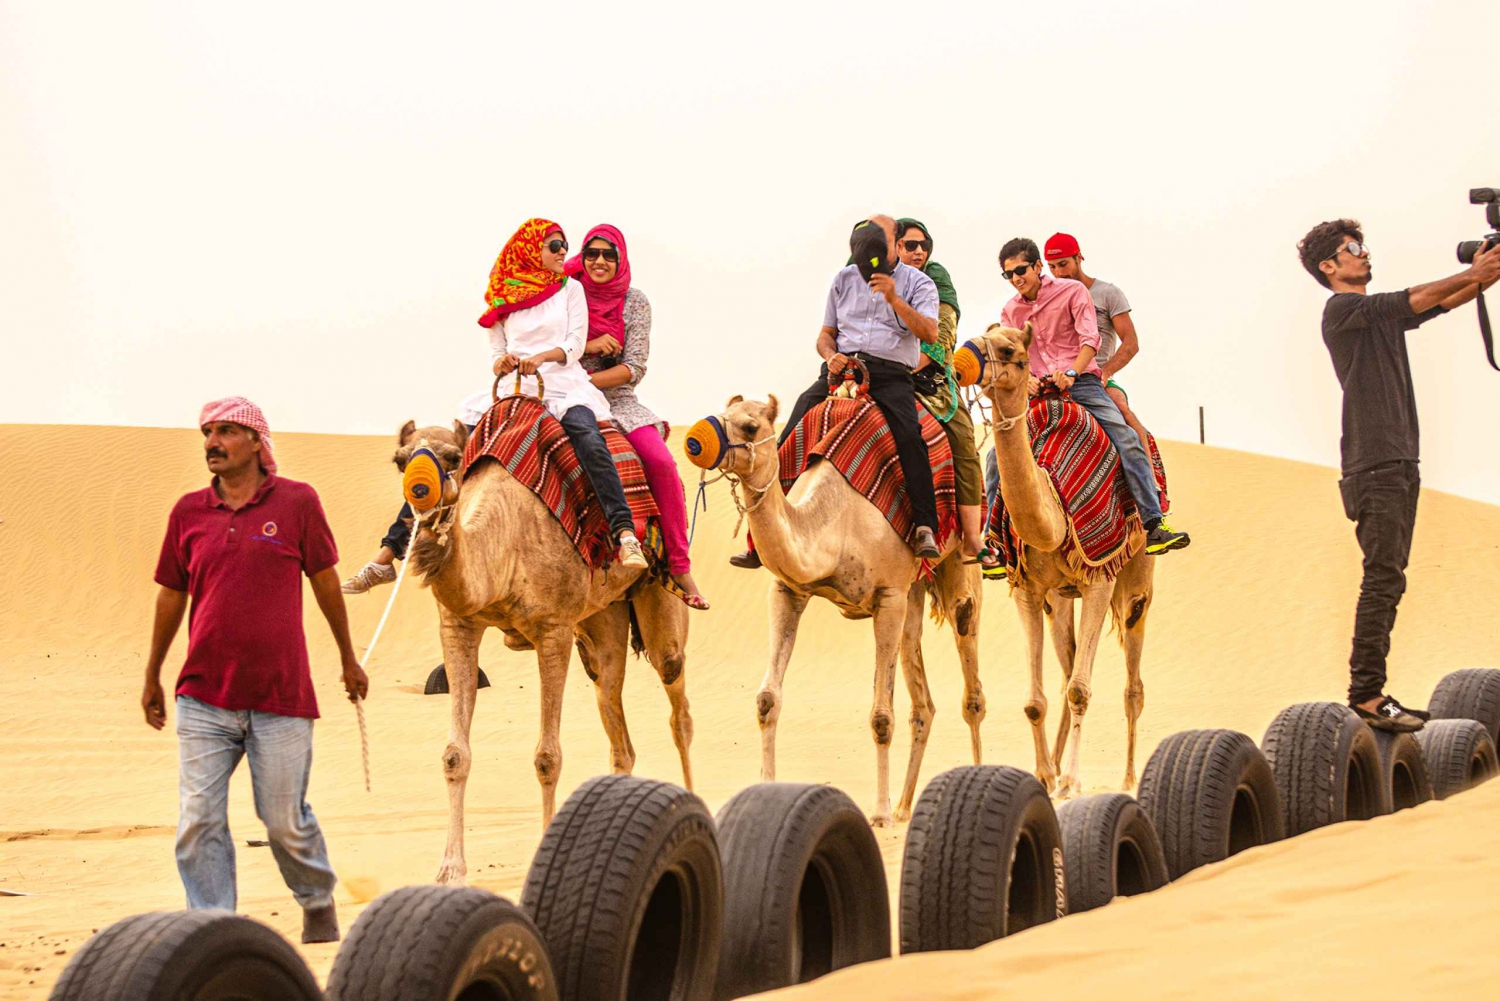 Dubai: Red Dunes Desert Tour with Camel Ride & Bbq Dinner